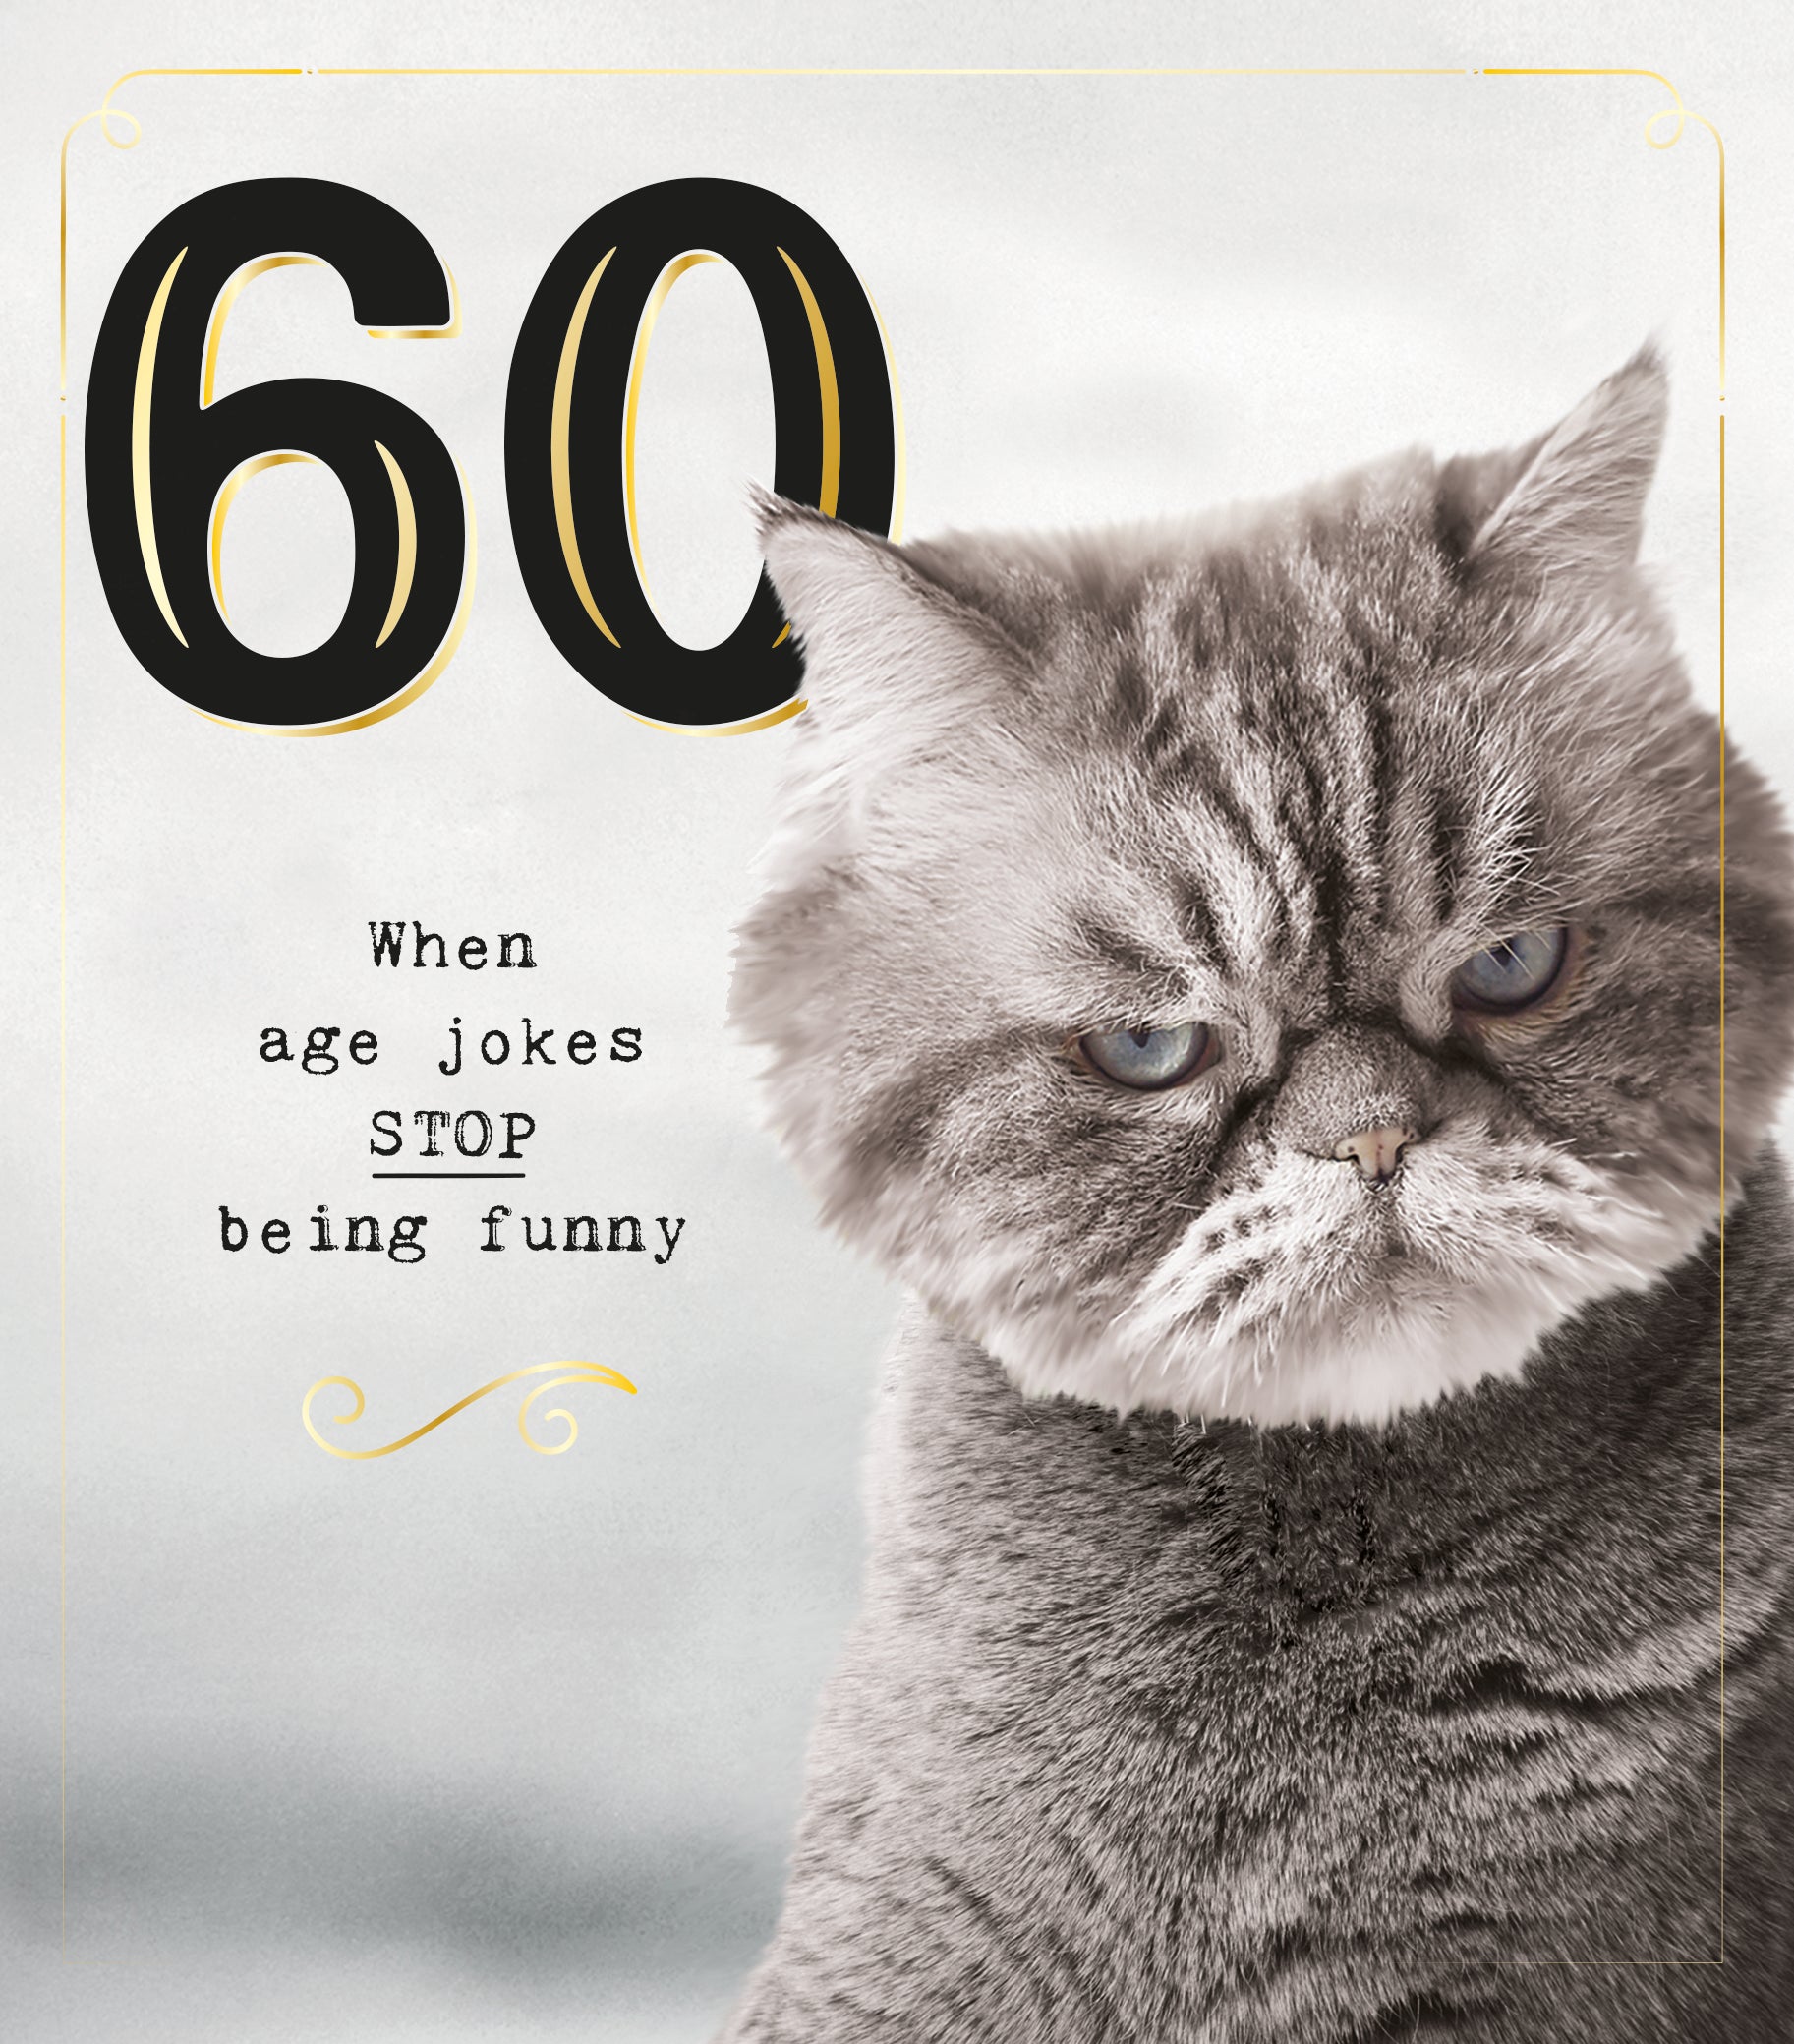 60 Age Jokes Funny Cat Birthday Card from Penny Black